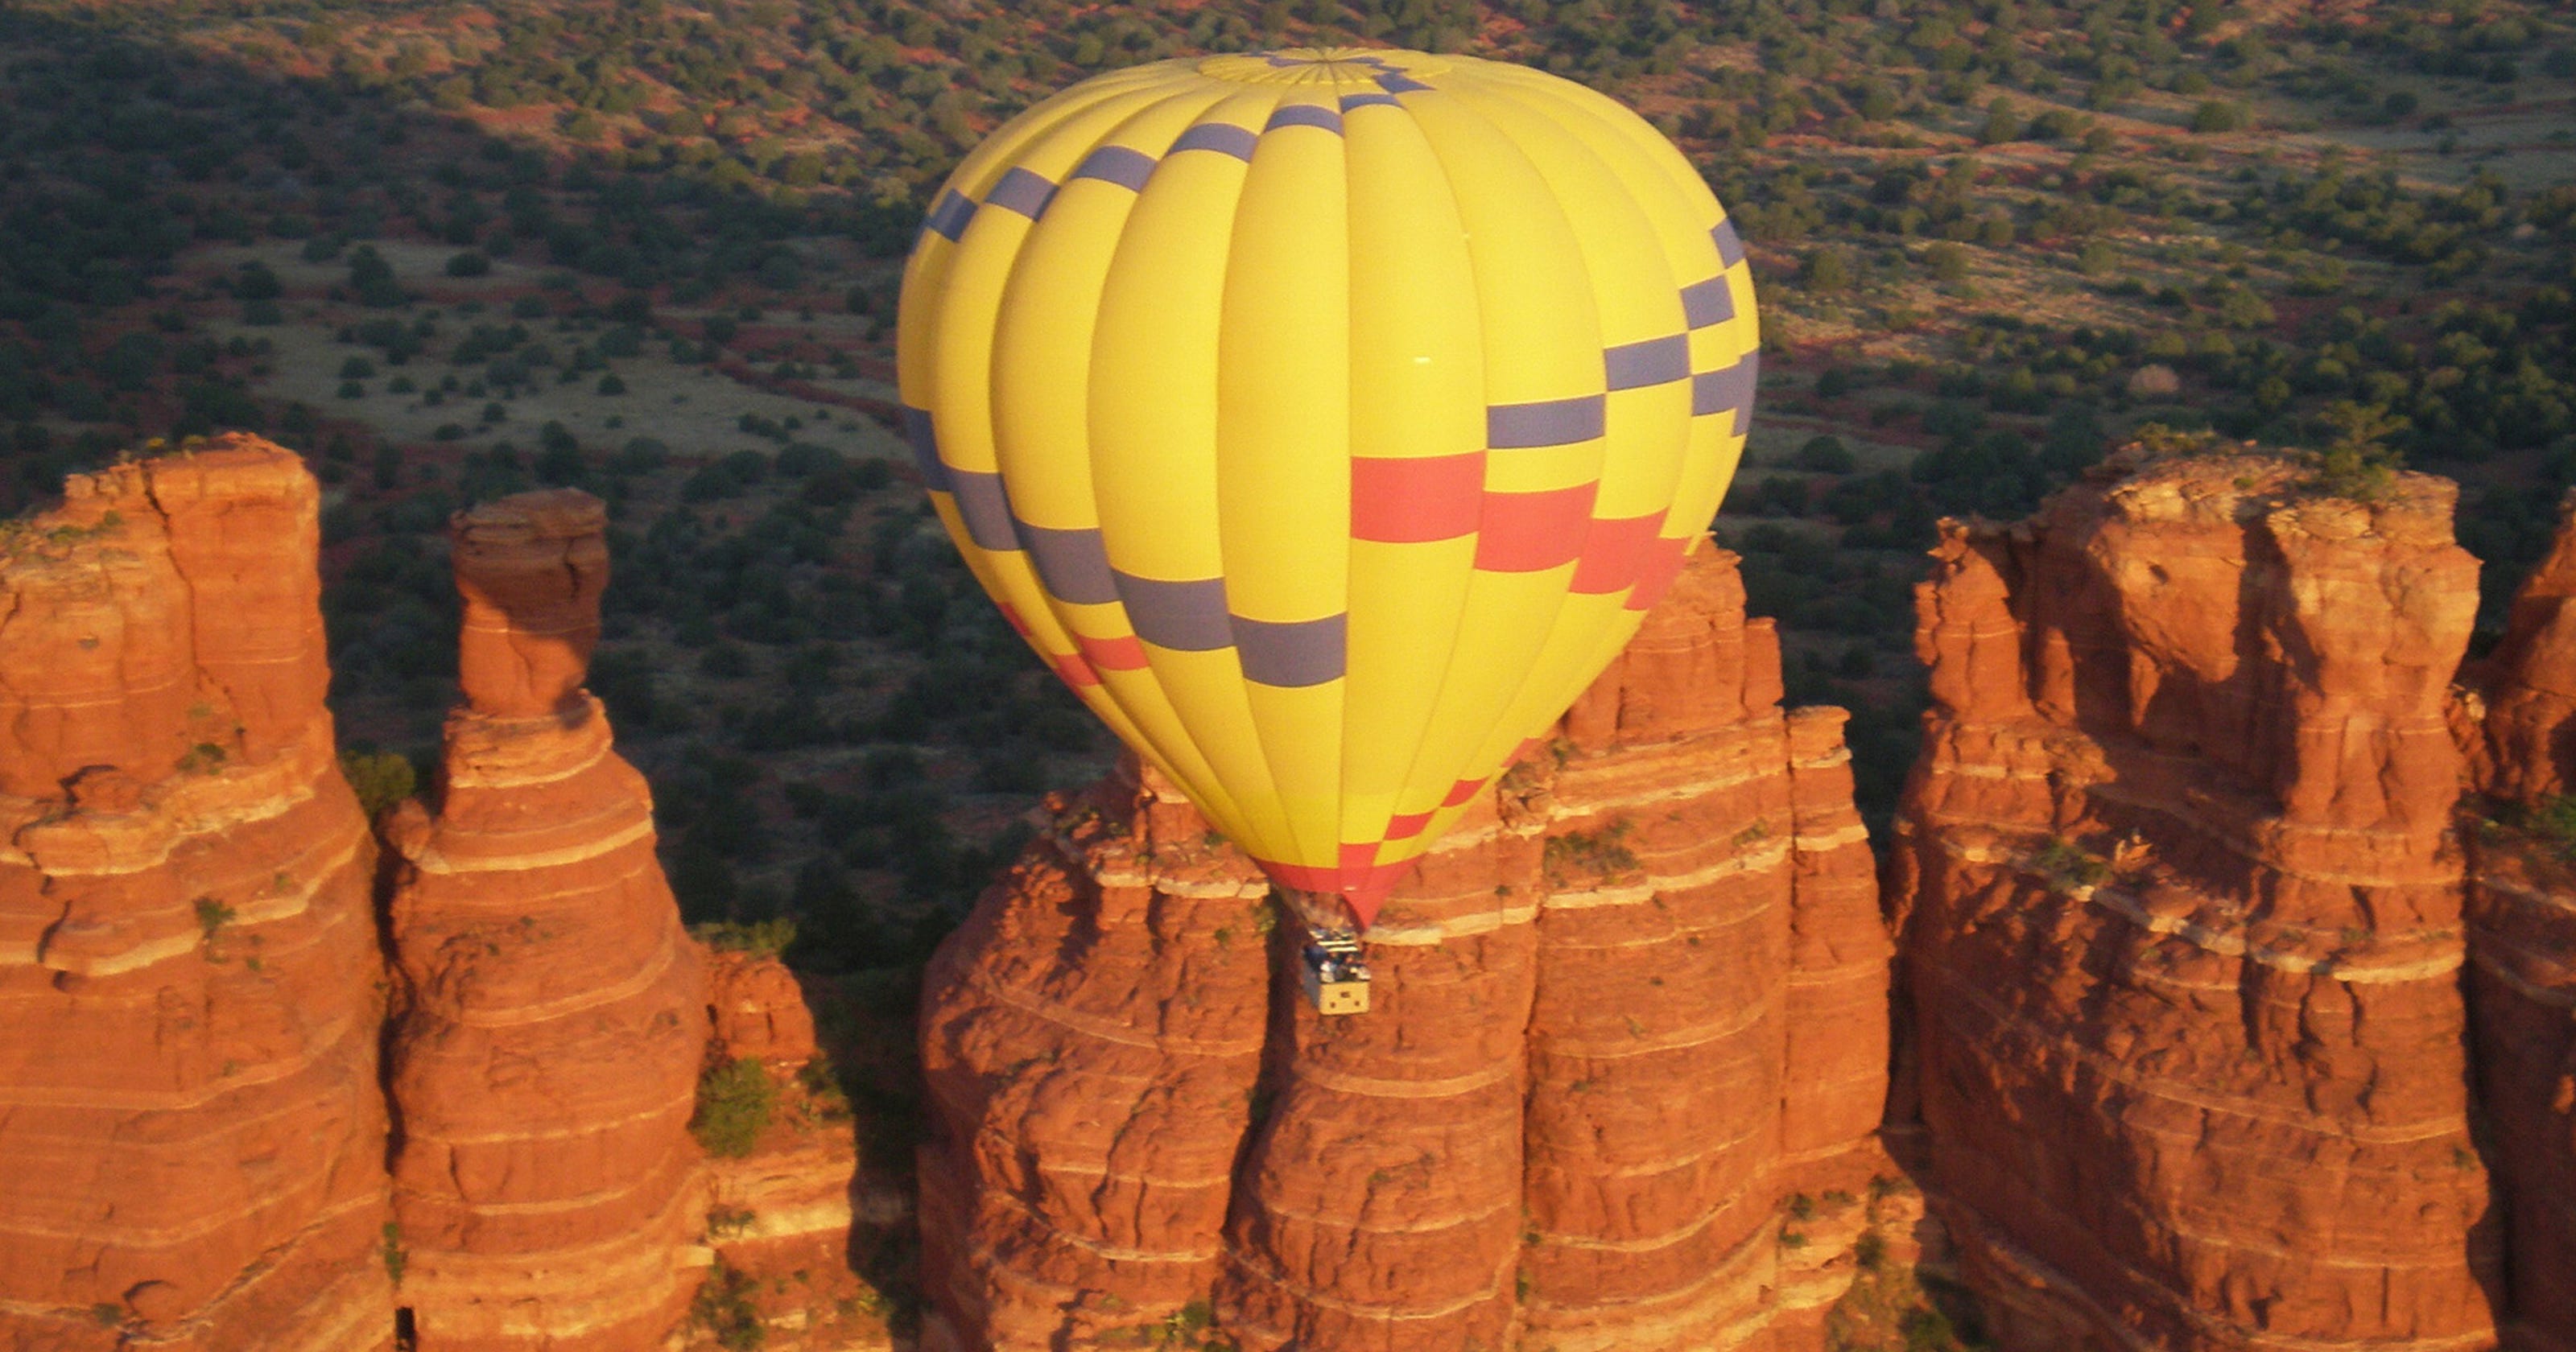 hot air balloon tours in sedona